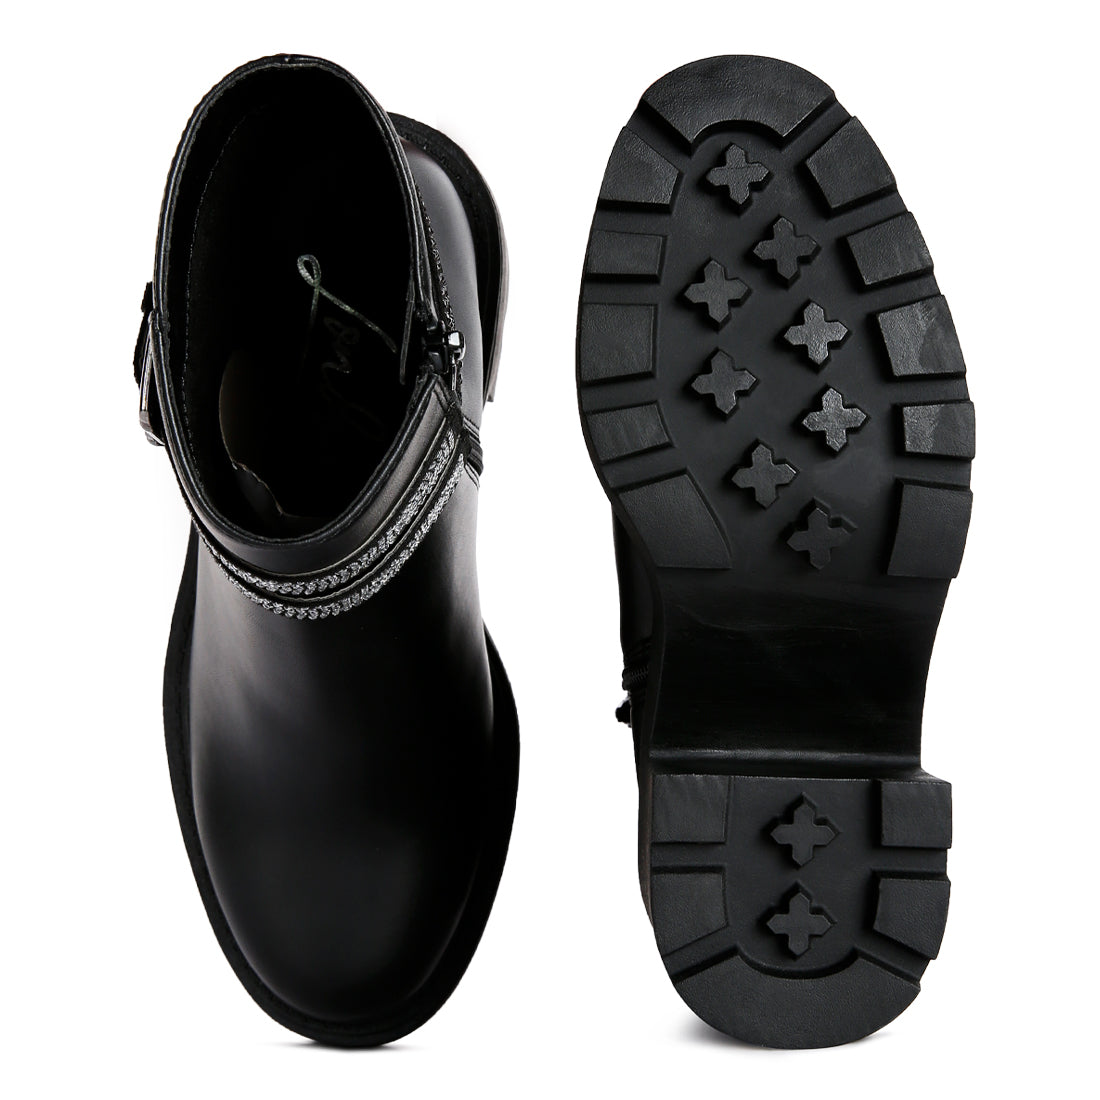 Black Diamante Detail Ankle Heel Boot